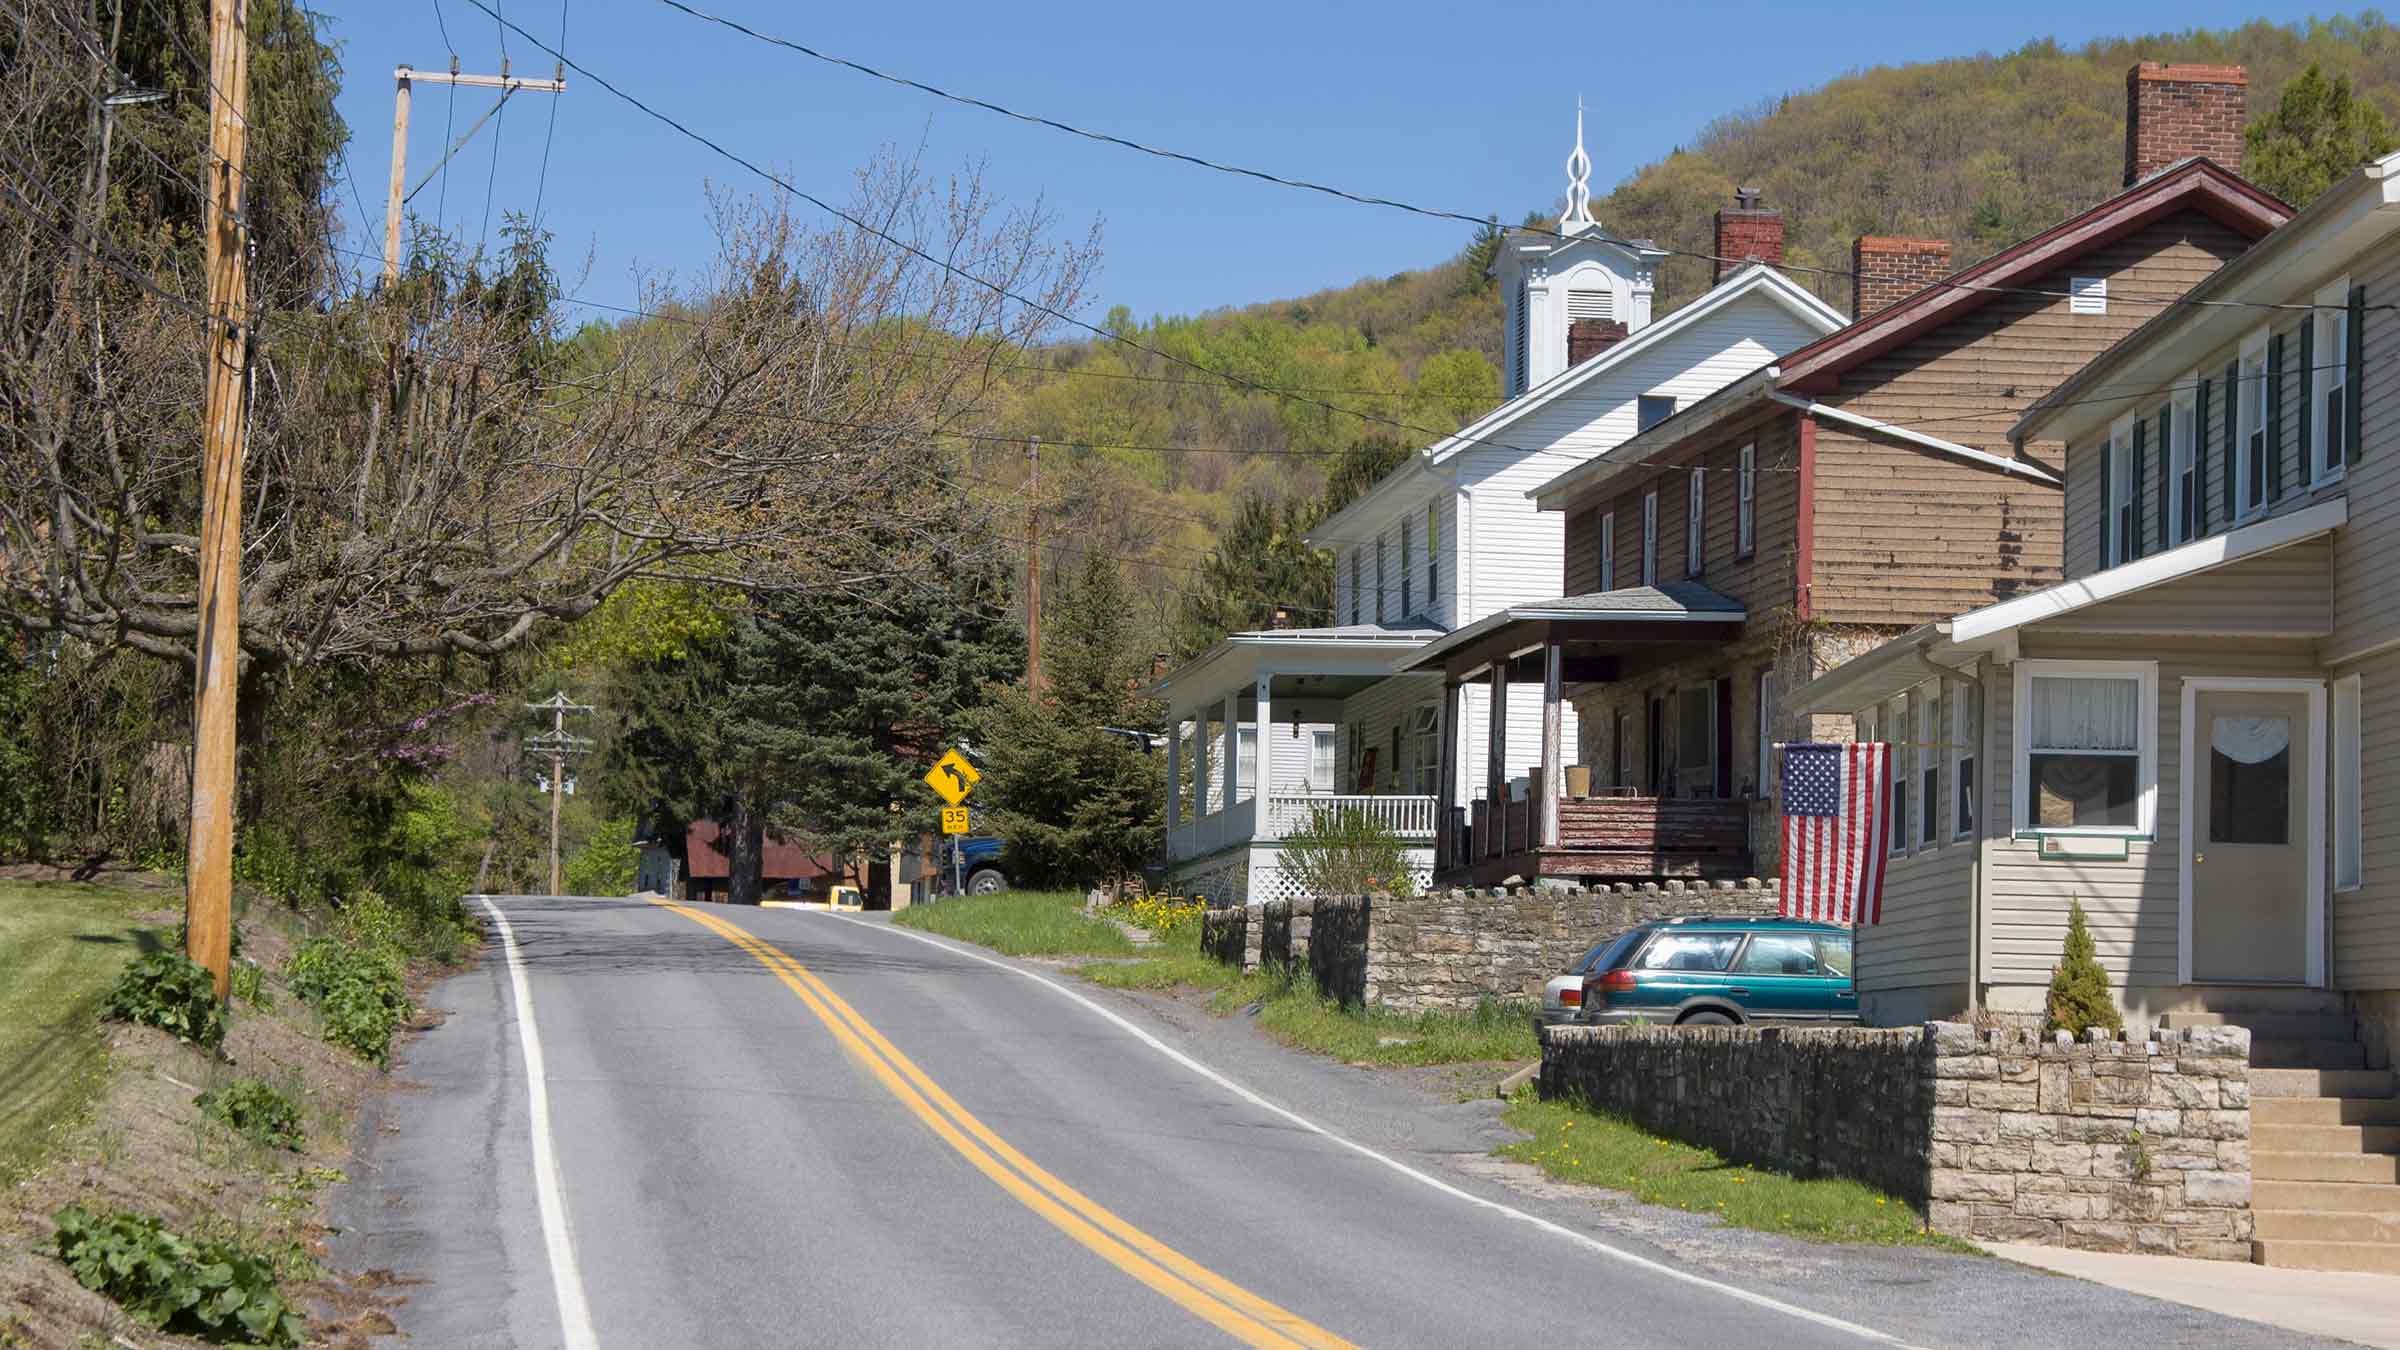 An American main street in rural Appalachia